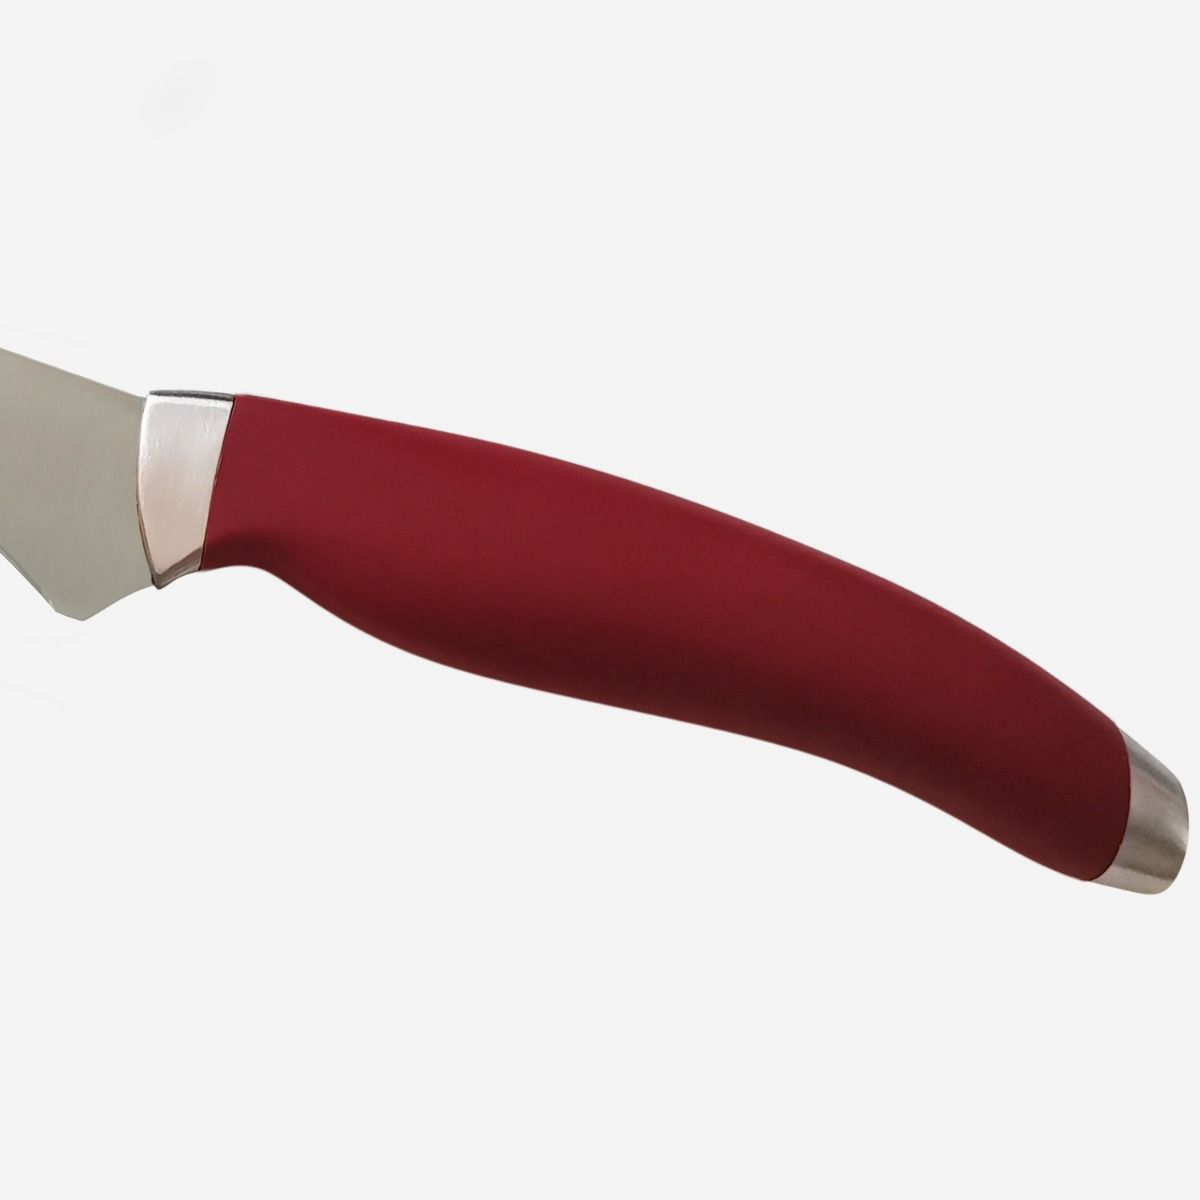 Chef's Knife 20 cm  Stainless Steel Berkel Teknica Handle Red Resin